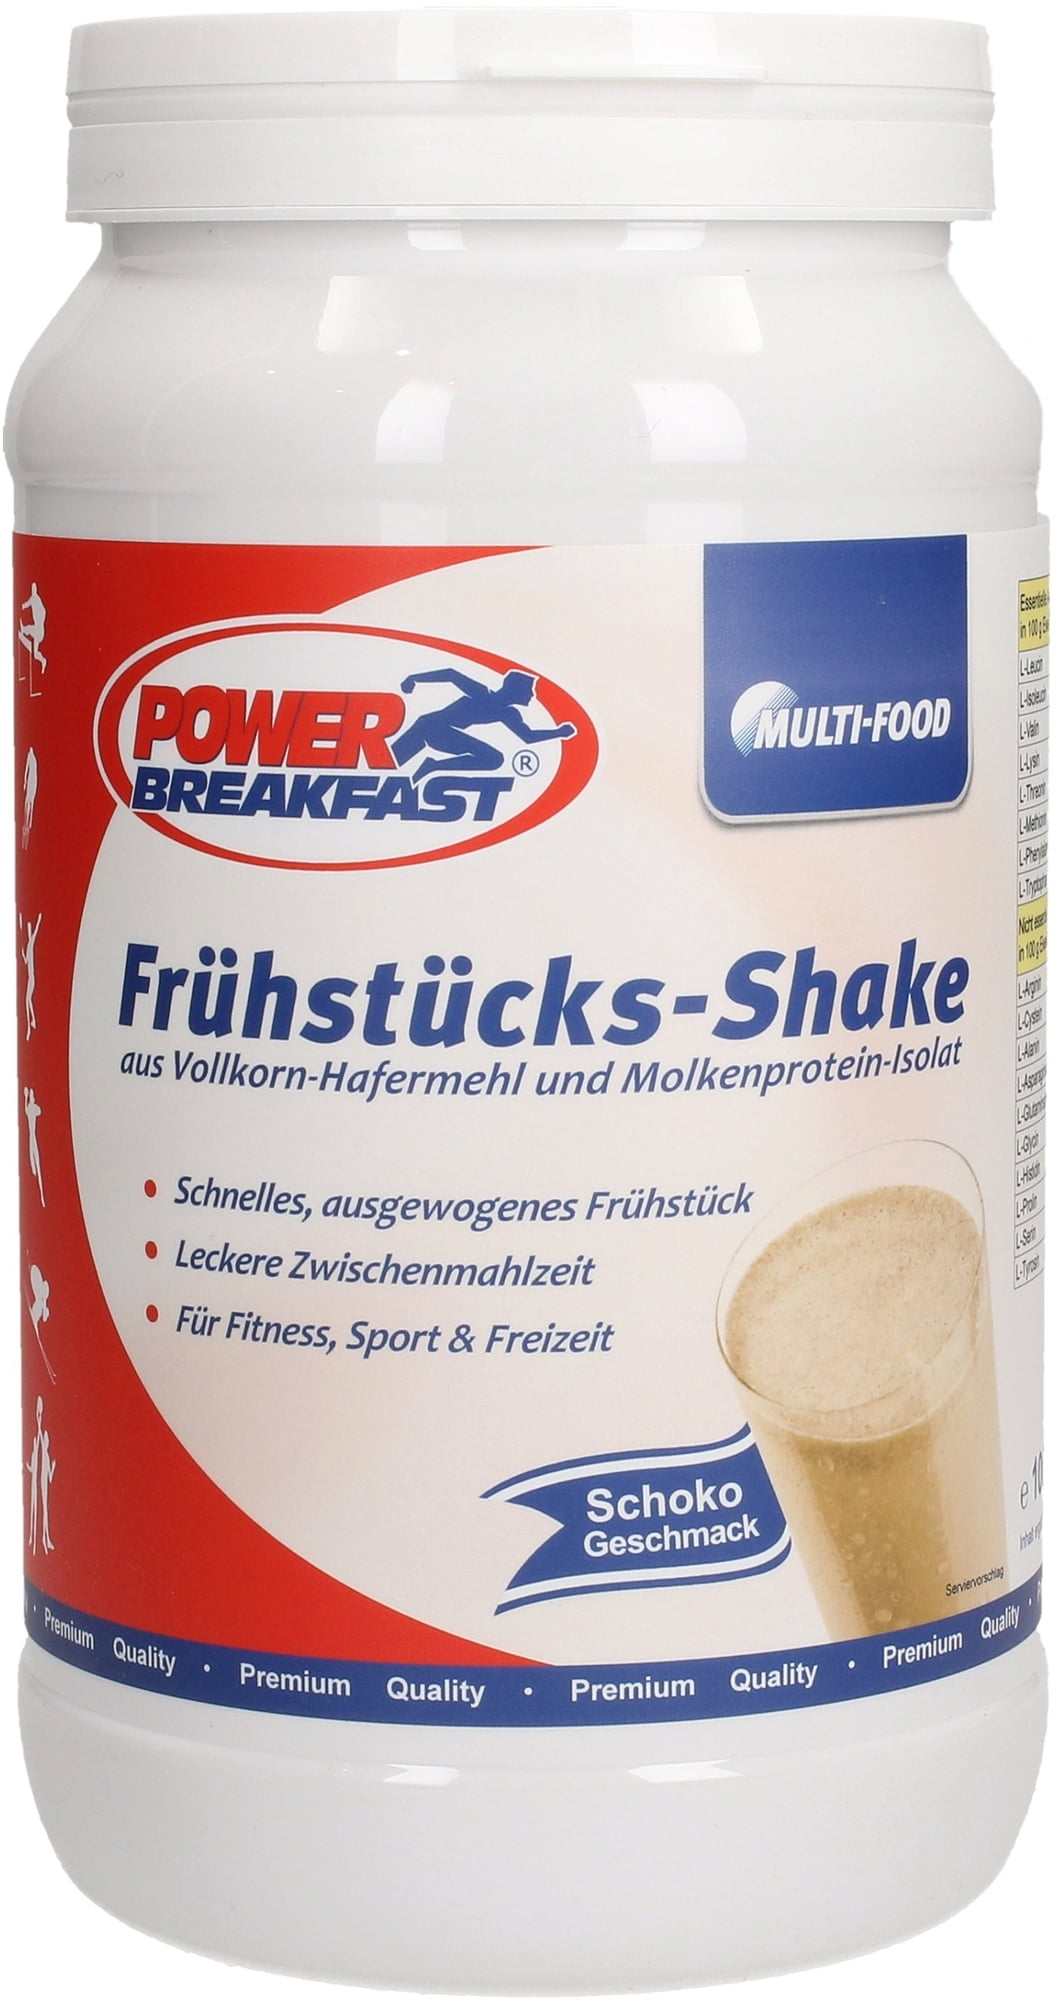 Power Breakfast - Frühstücks Shake 1000 g - Schoko